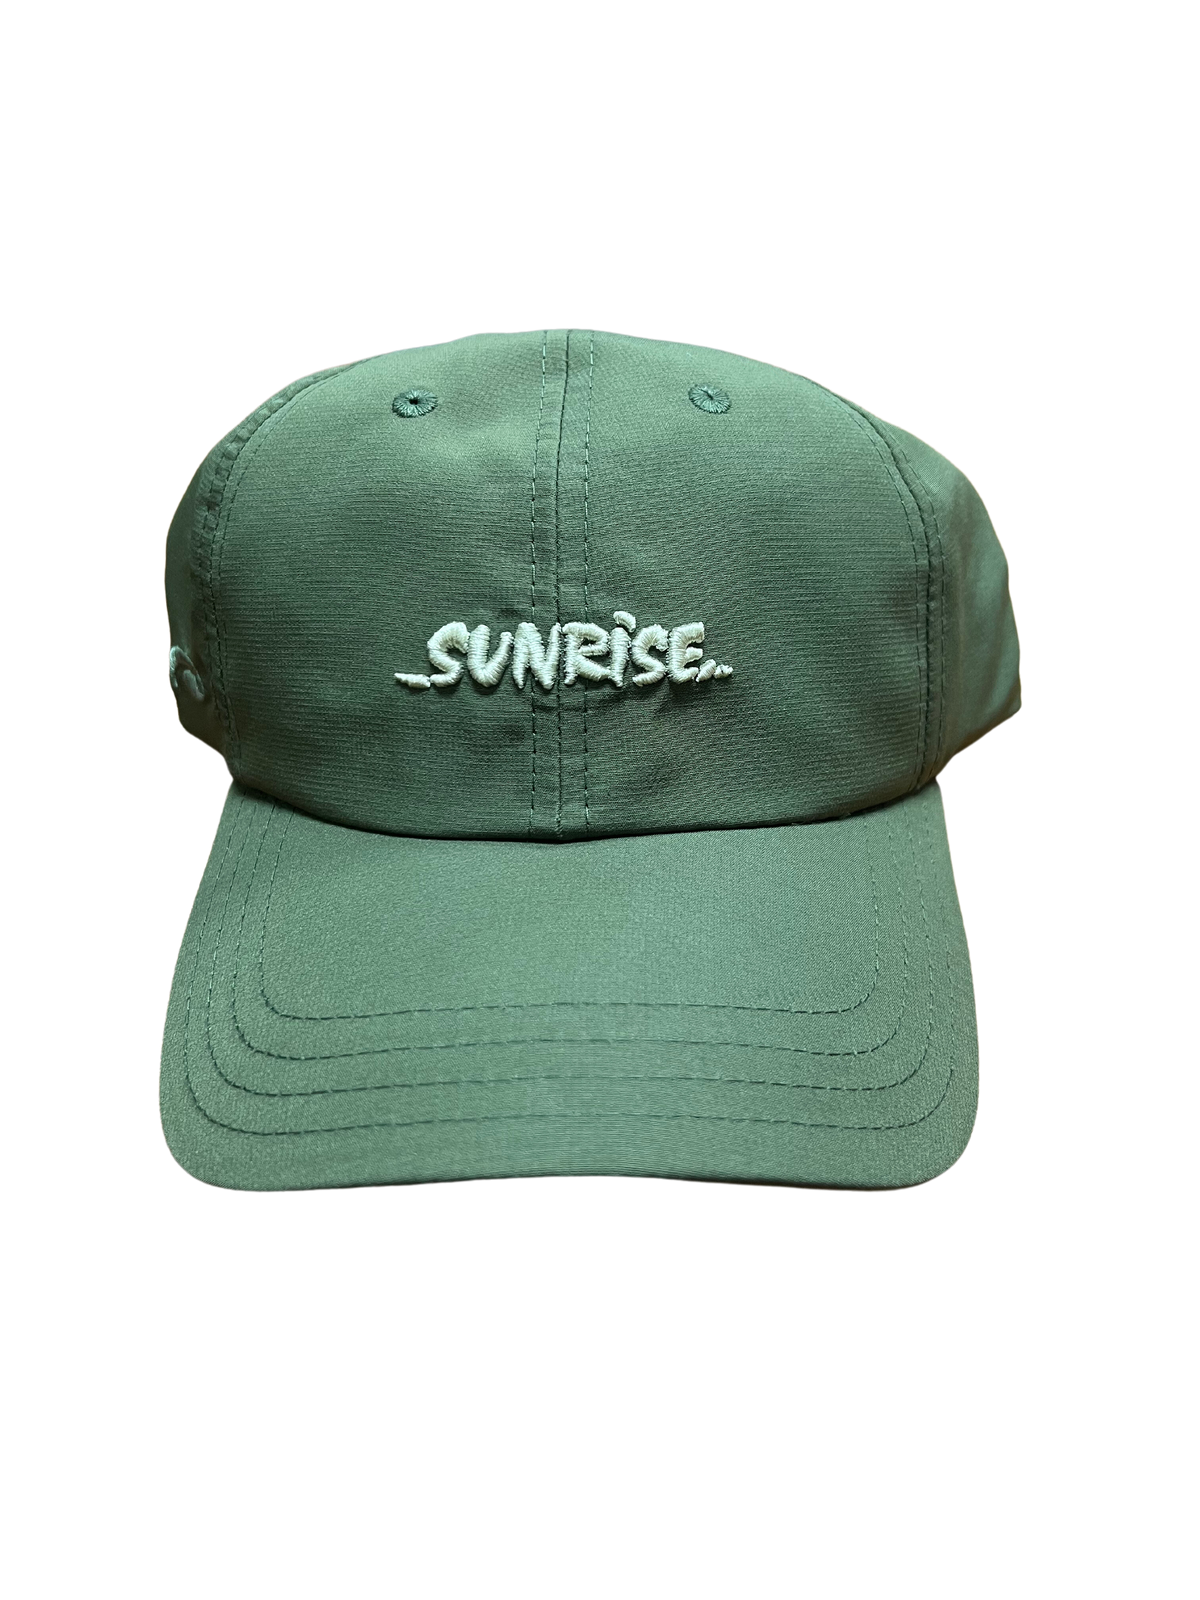 Sunrise Surf Shop Performance 6 Panel Hat